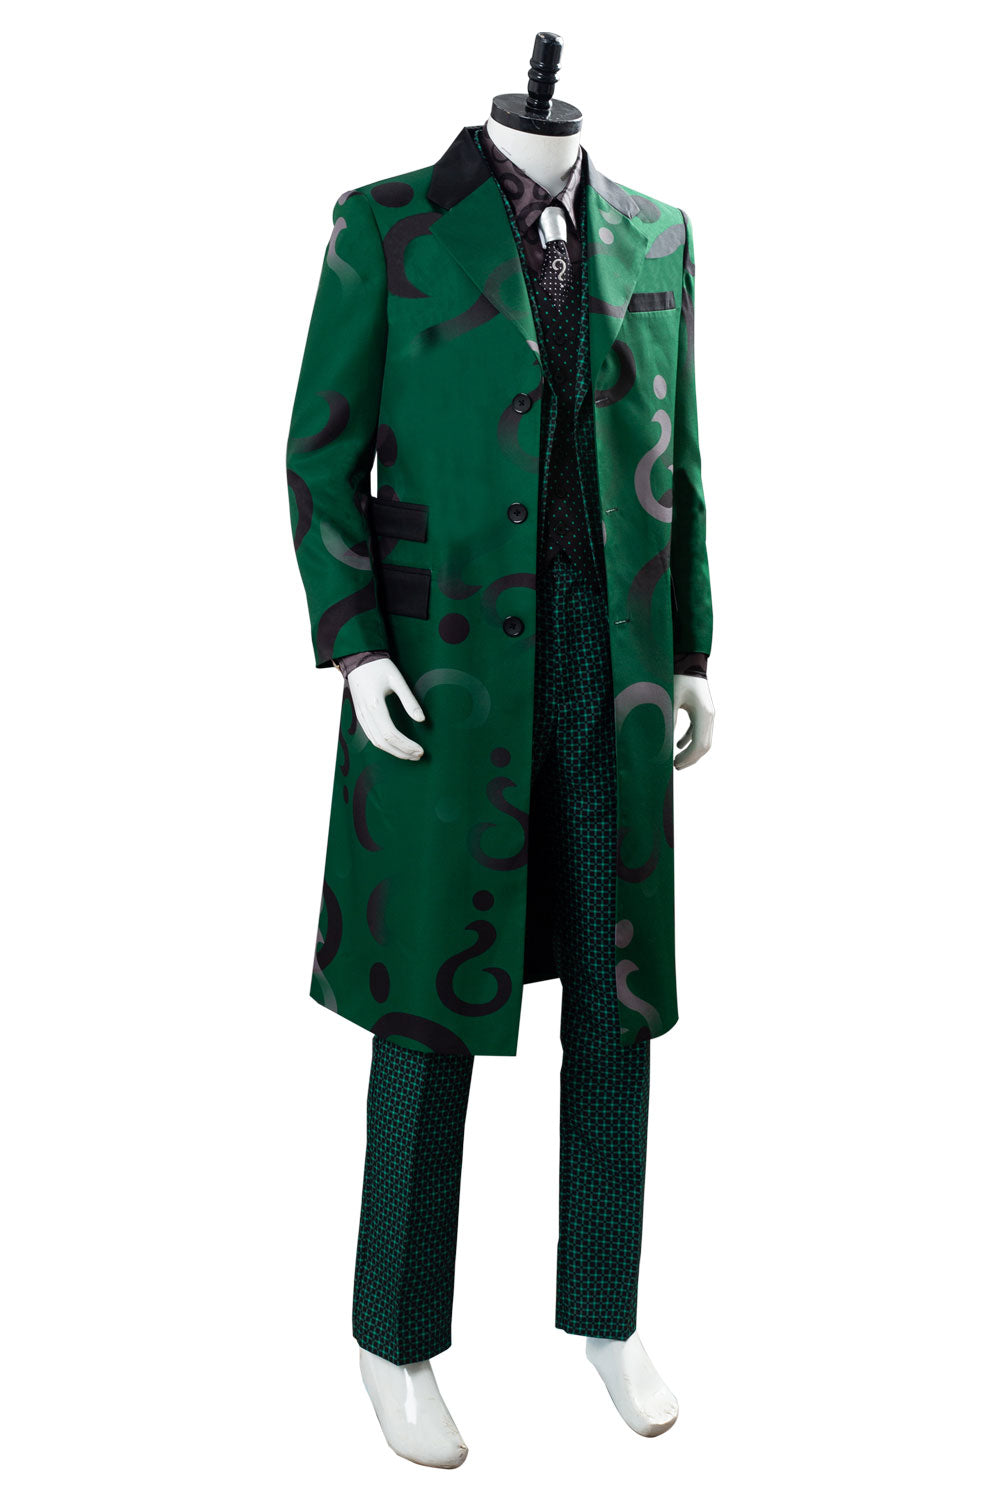 Gotham 5 Edward Nygma Riddler Kostüm Cosplay Kostüm Grün Set